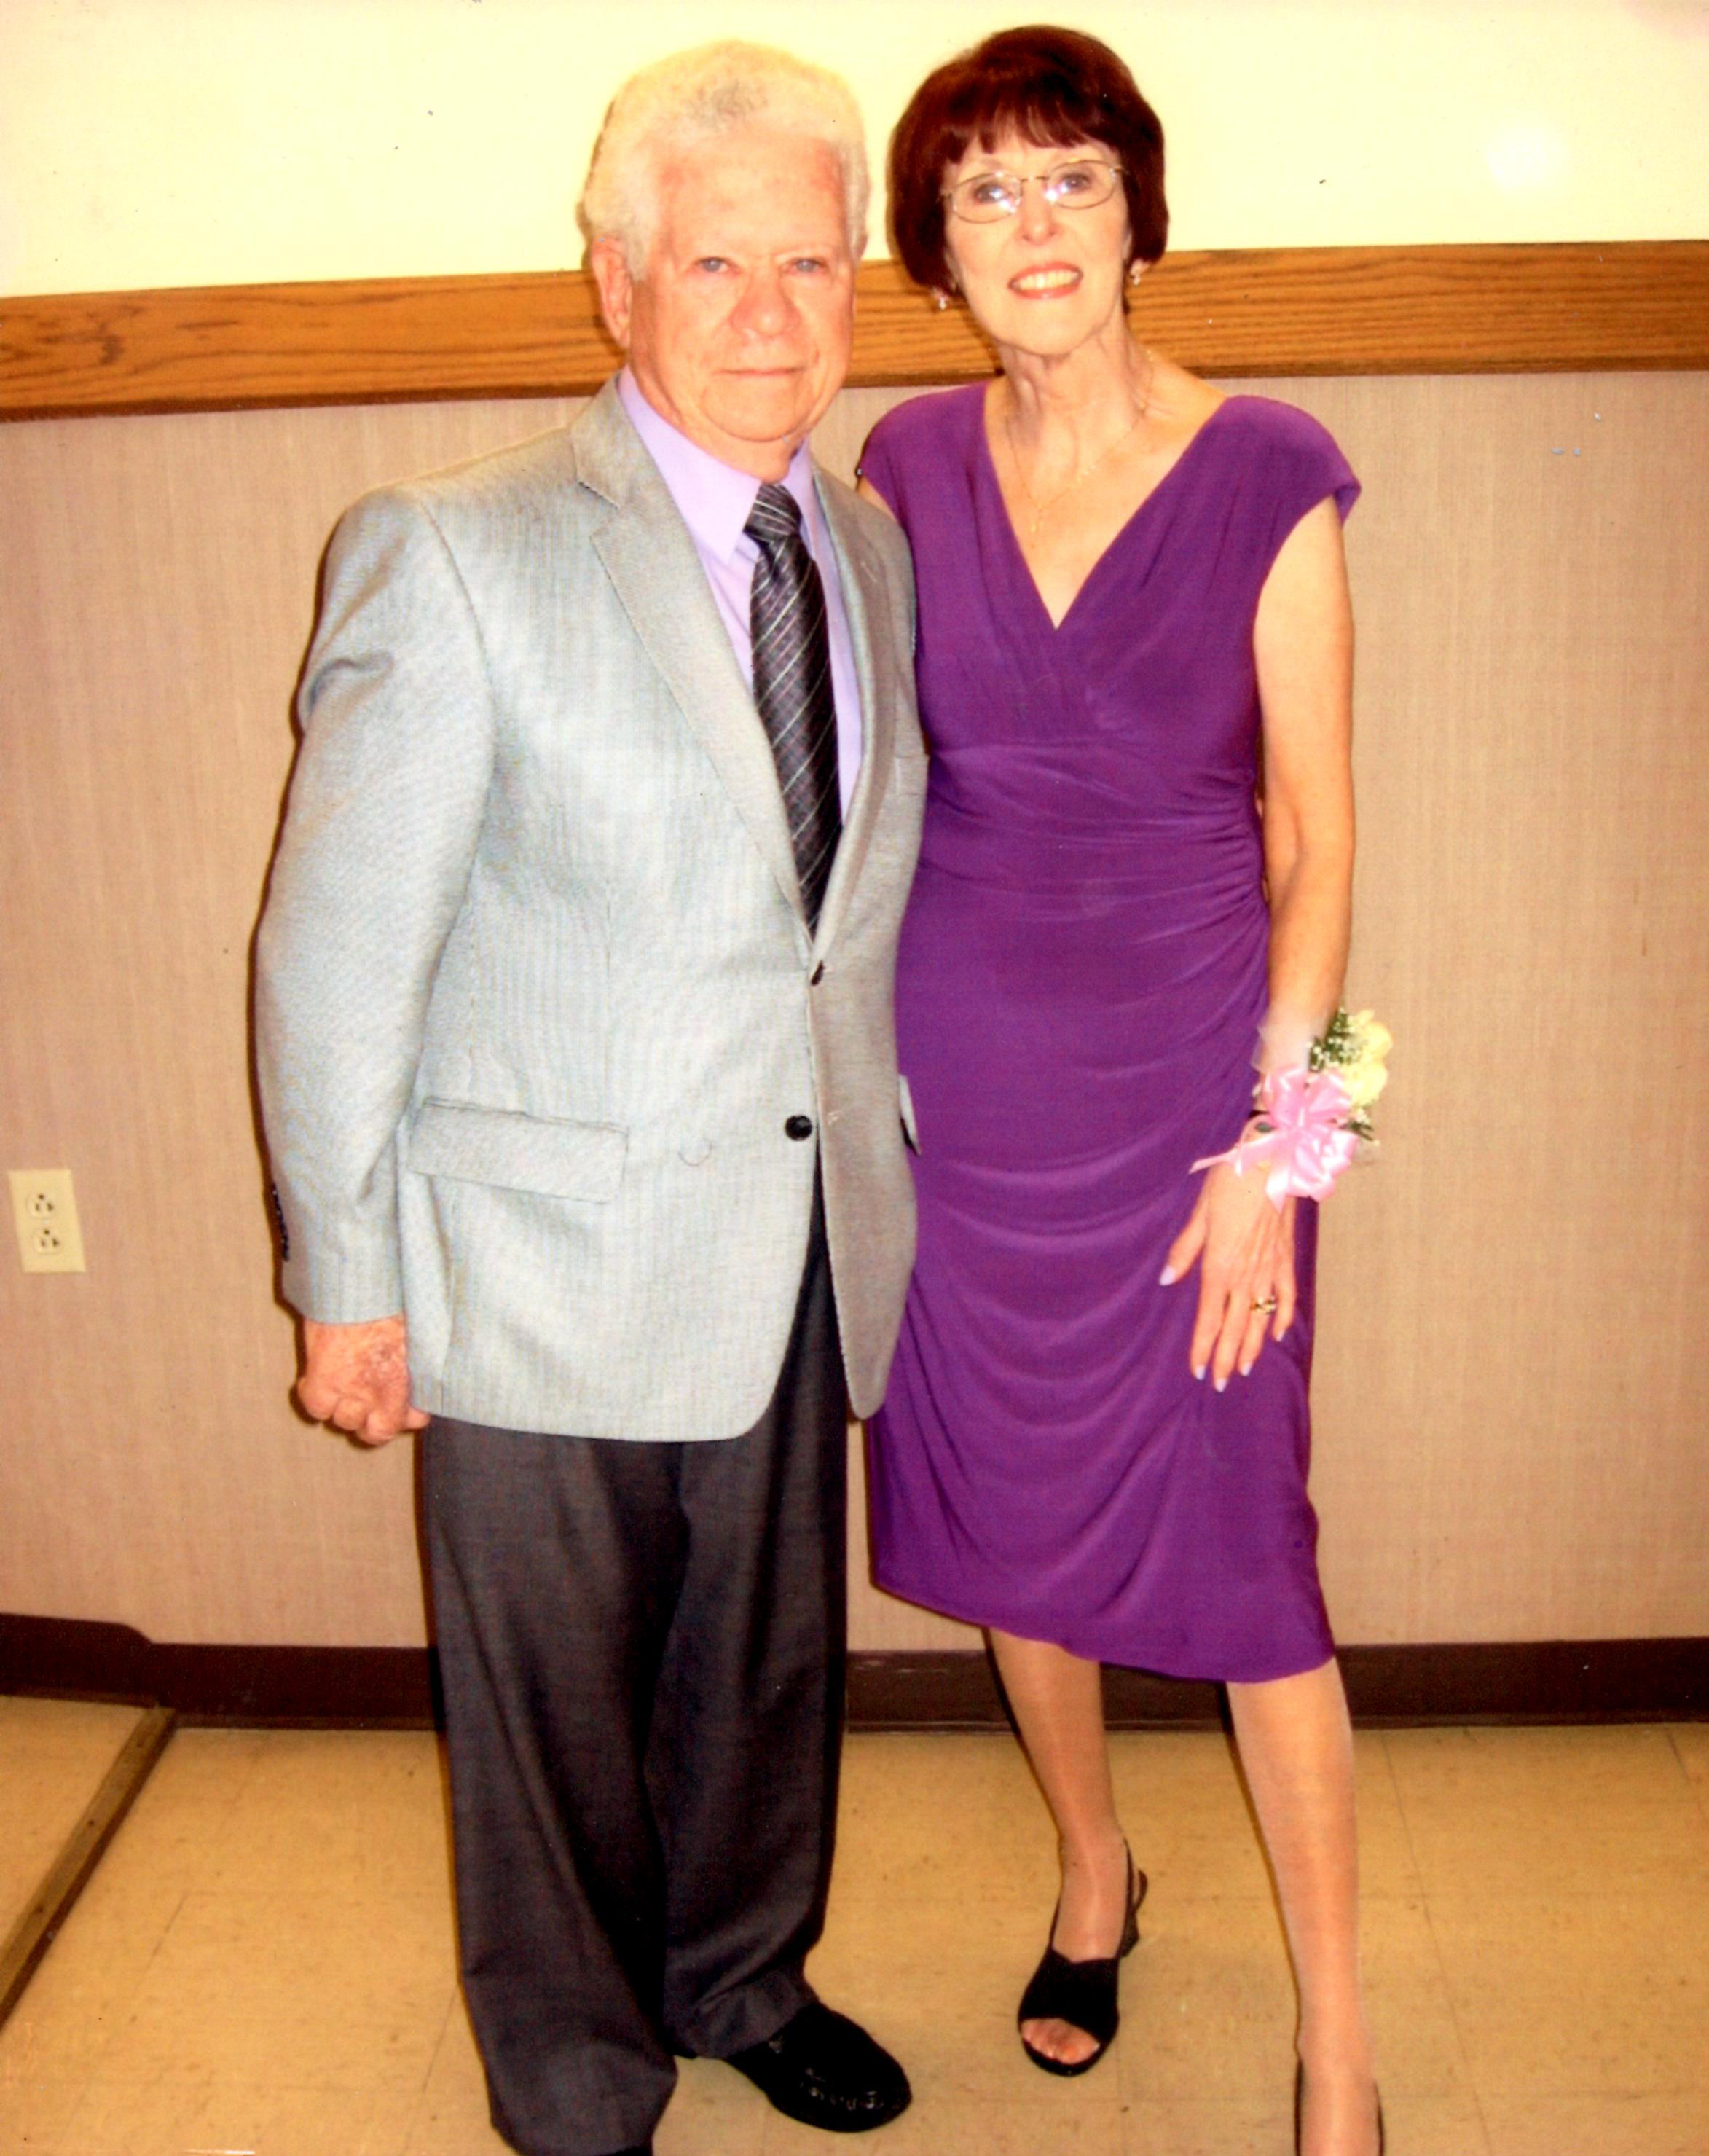 Tom and Marlene Maurer Dailey